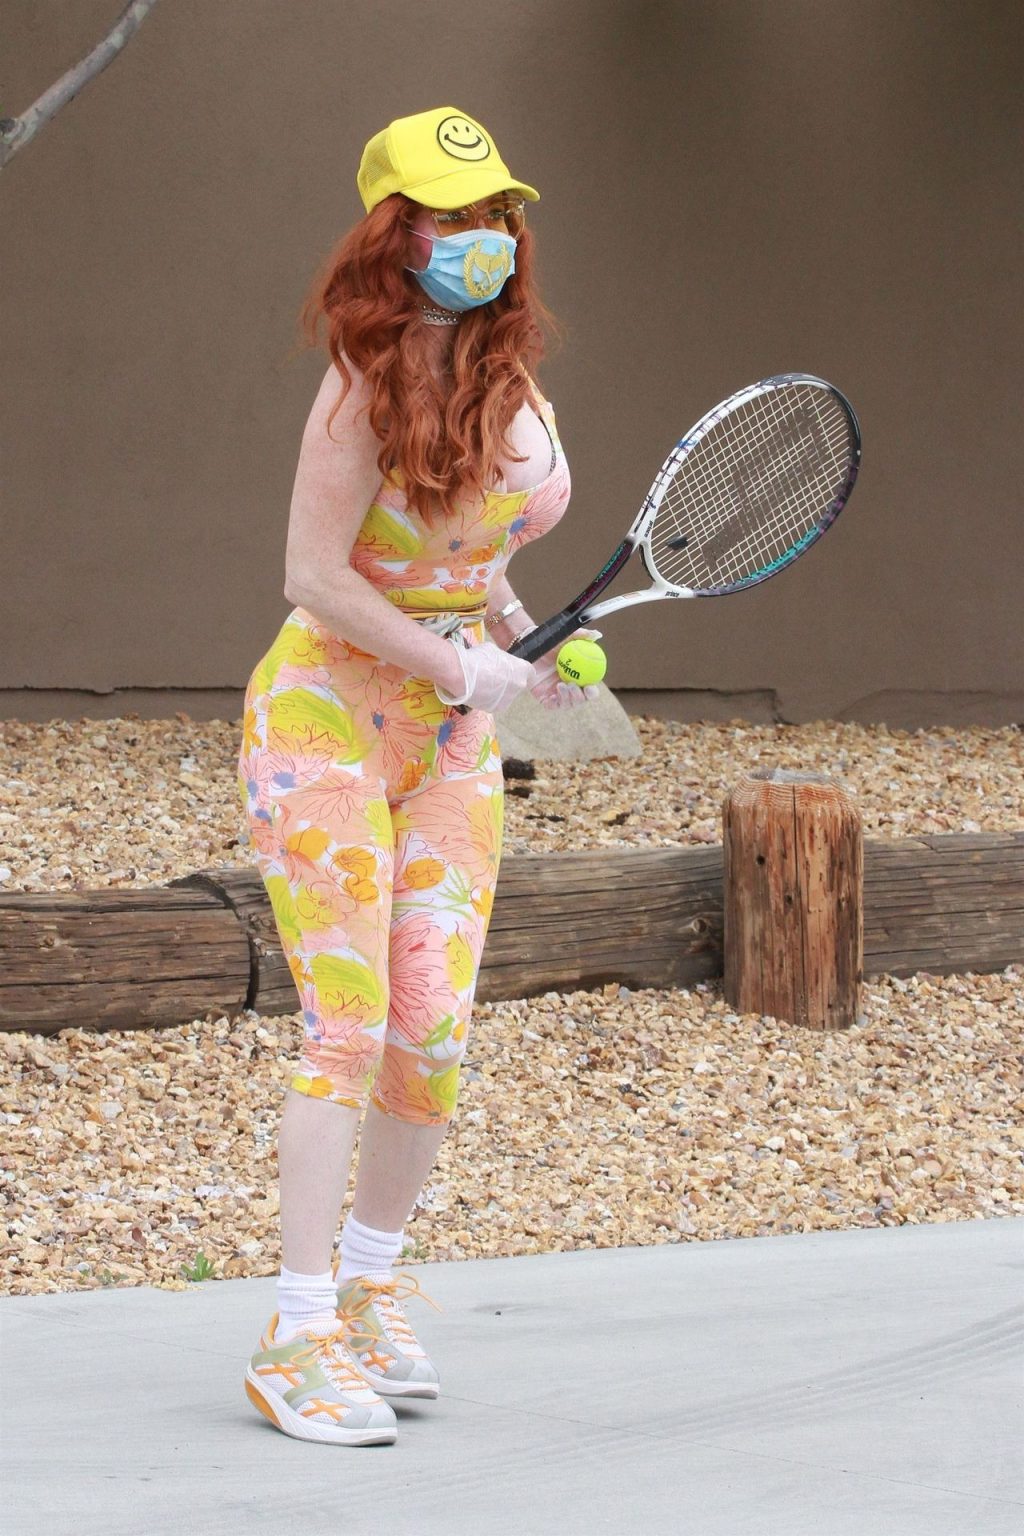 Phoebe Price Gets Some Tennis During Quarantine (24 Photos)